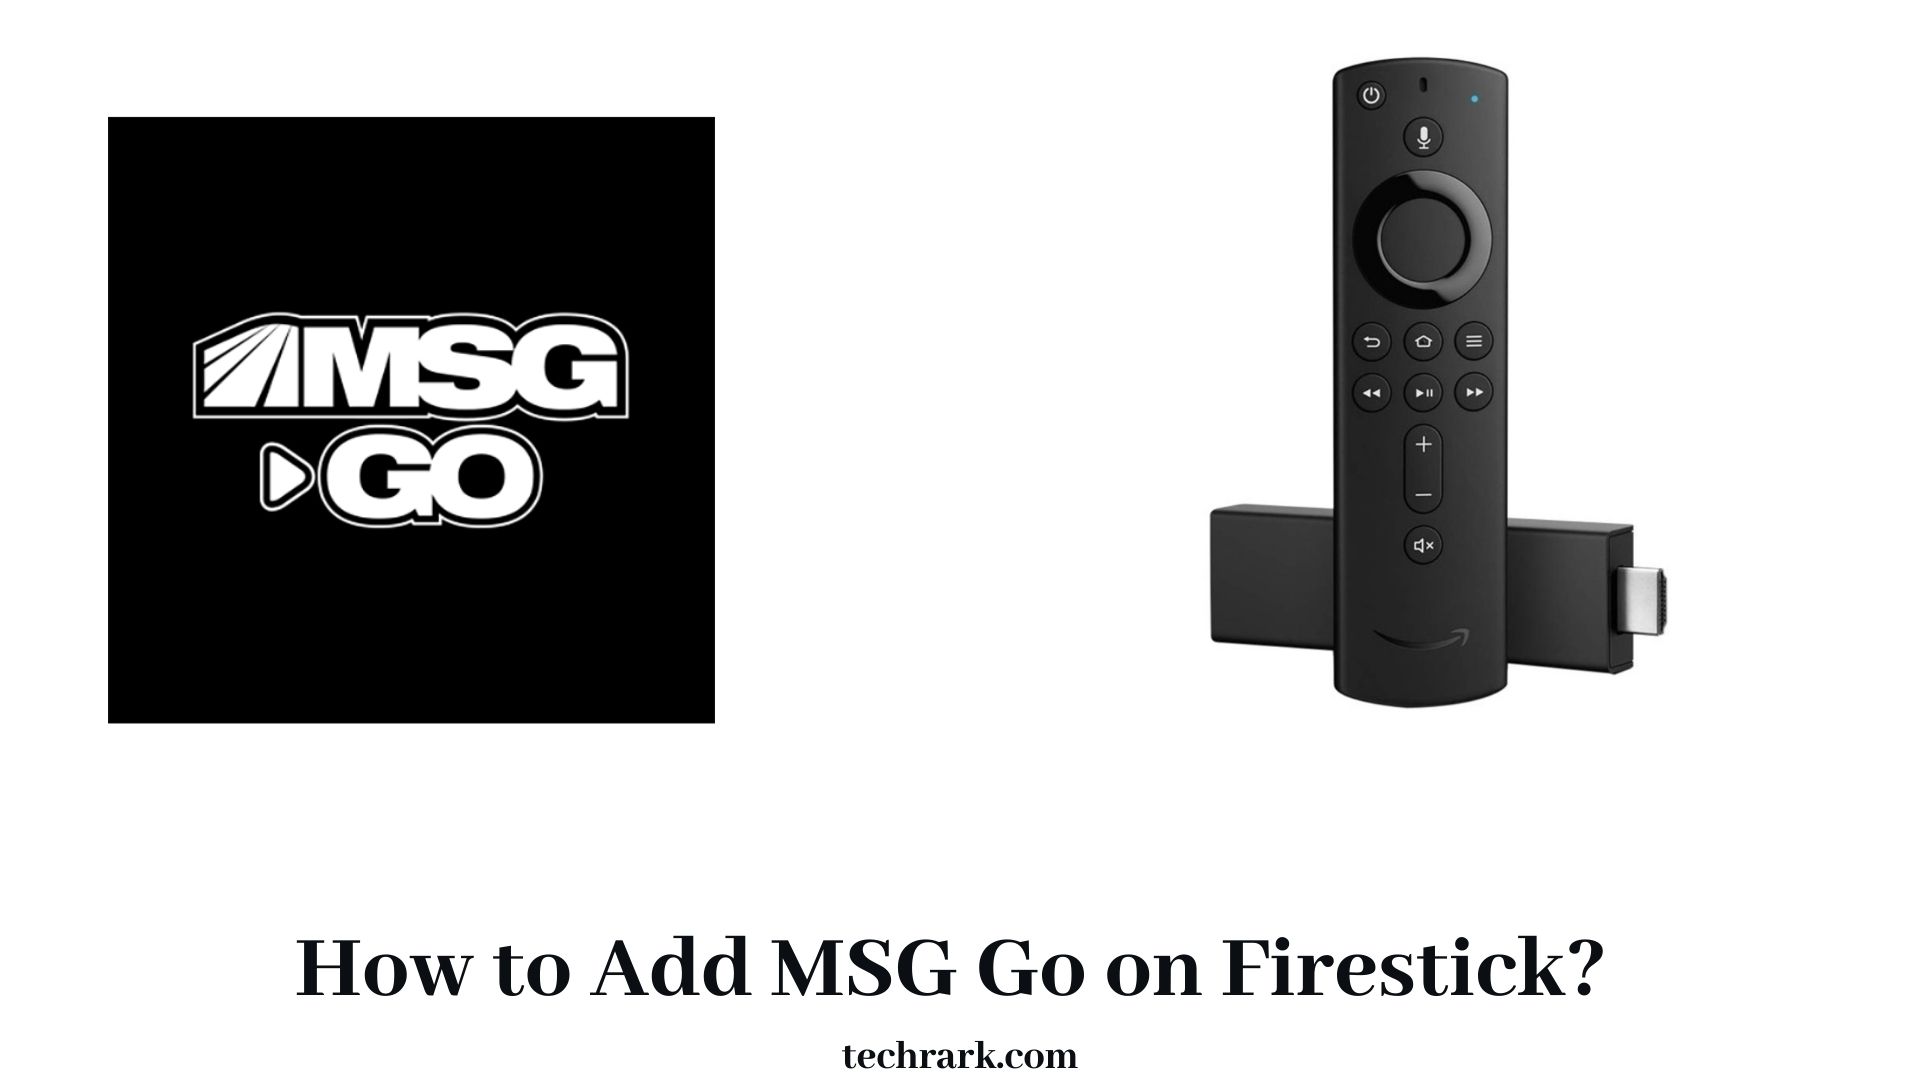 MSG Go on Firestick